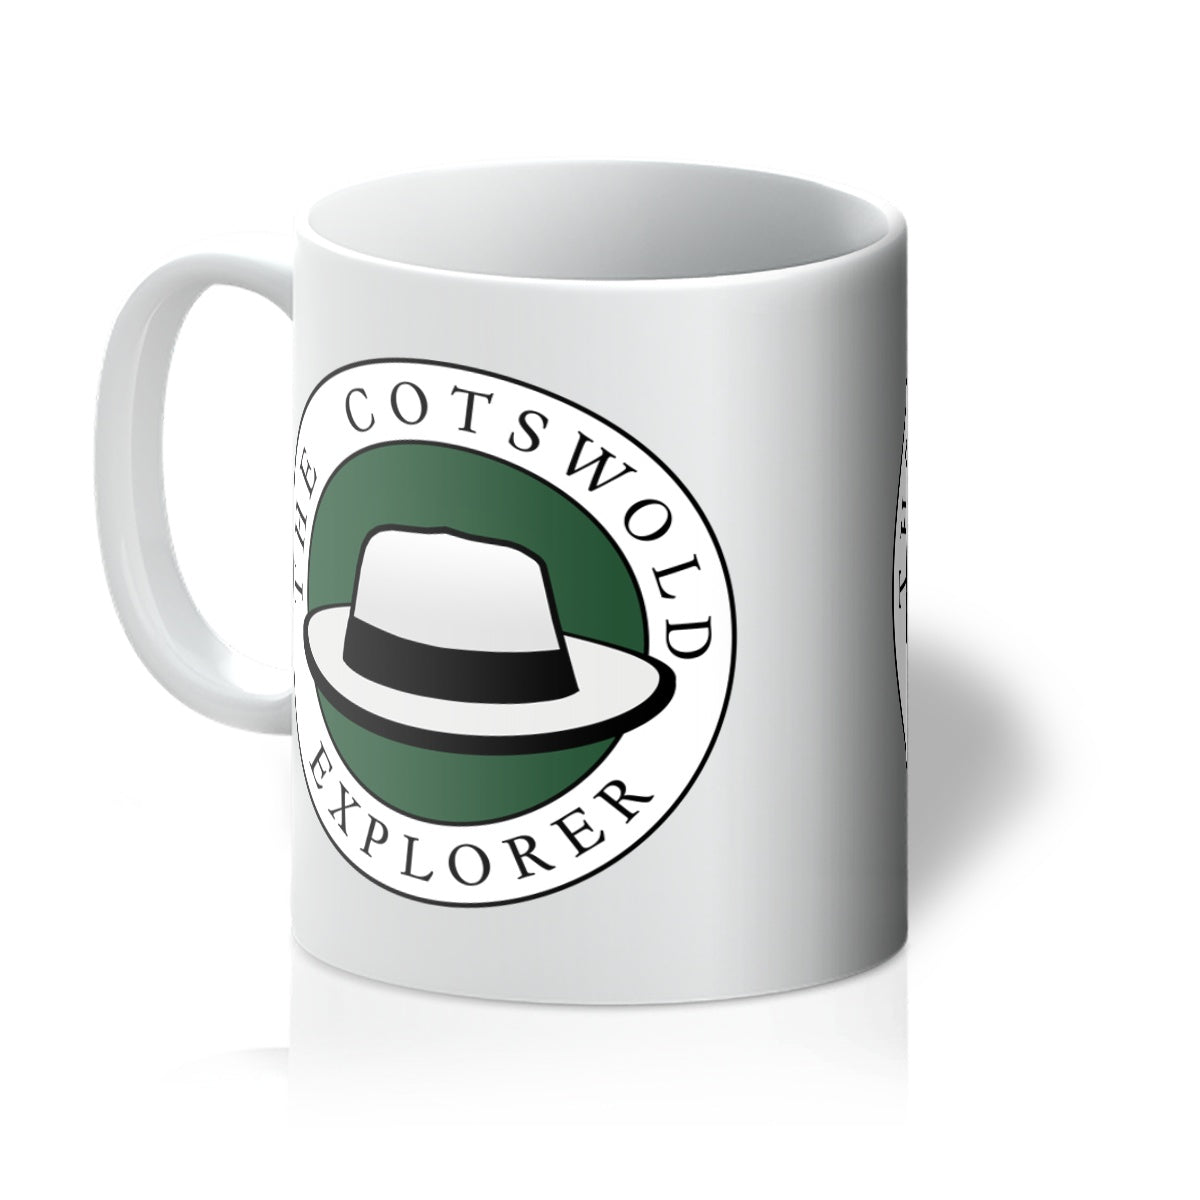 Cotswold Explorer Logo Mug